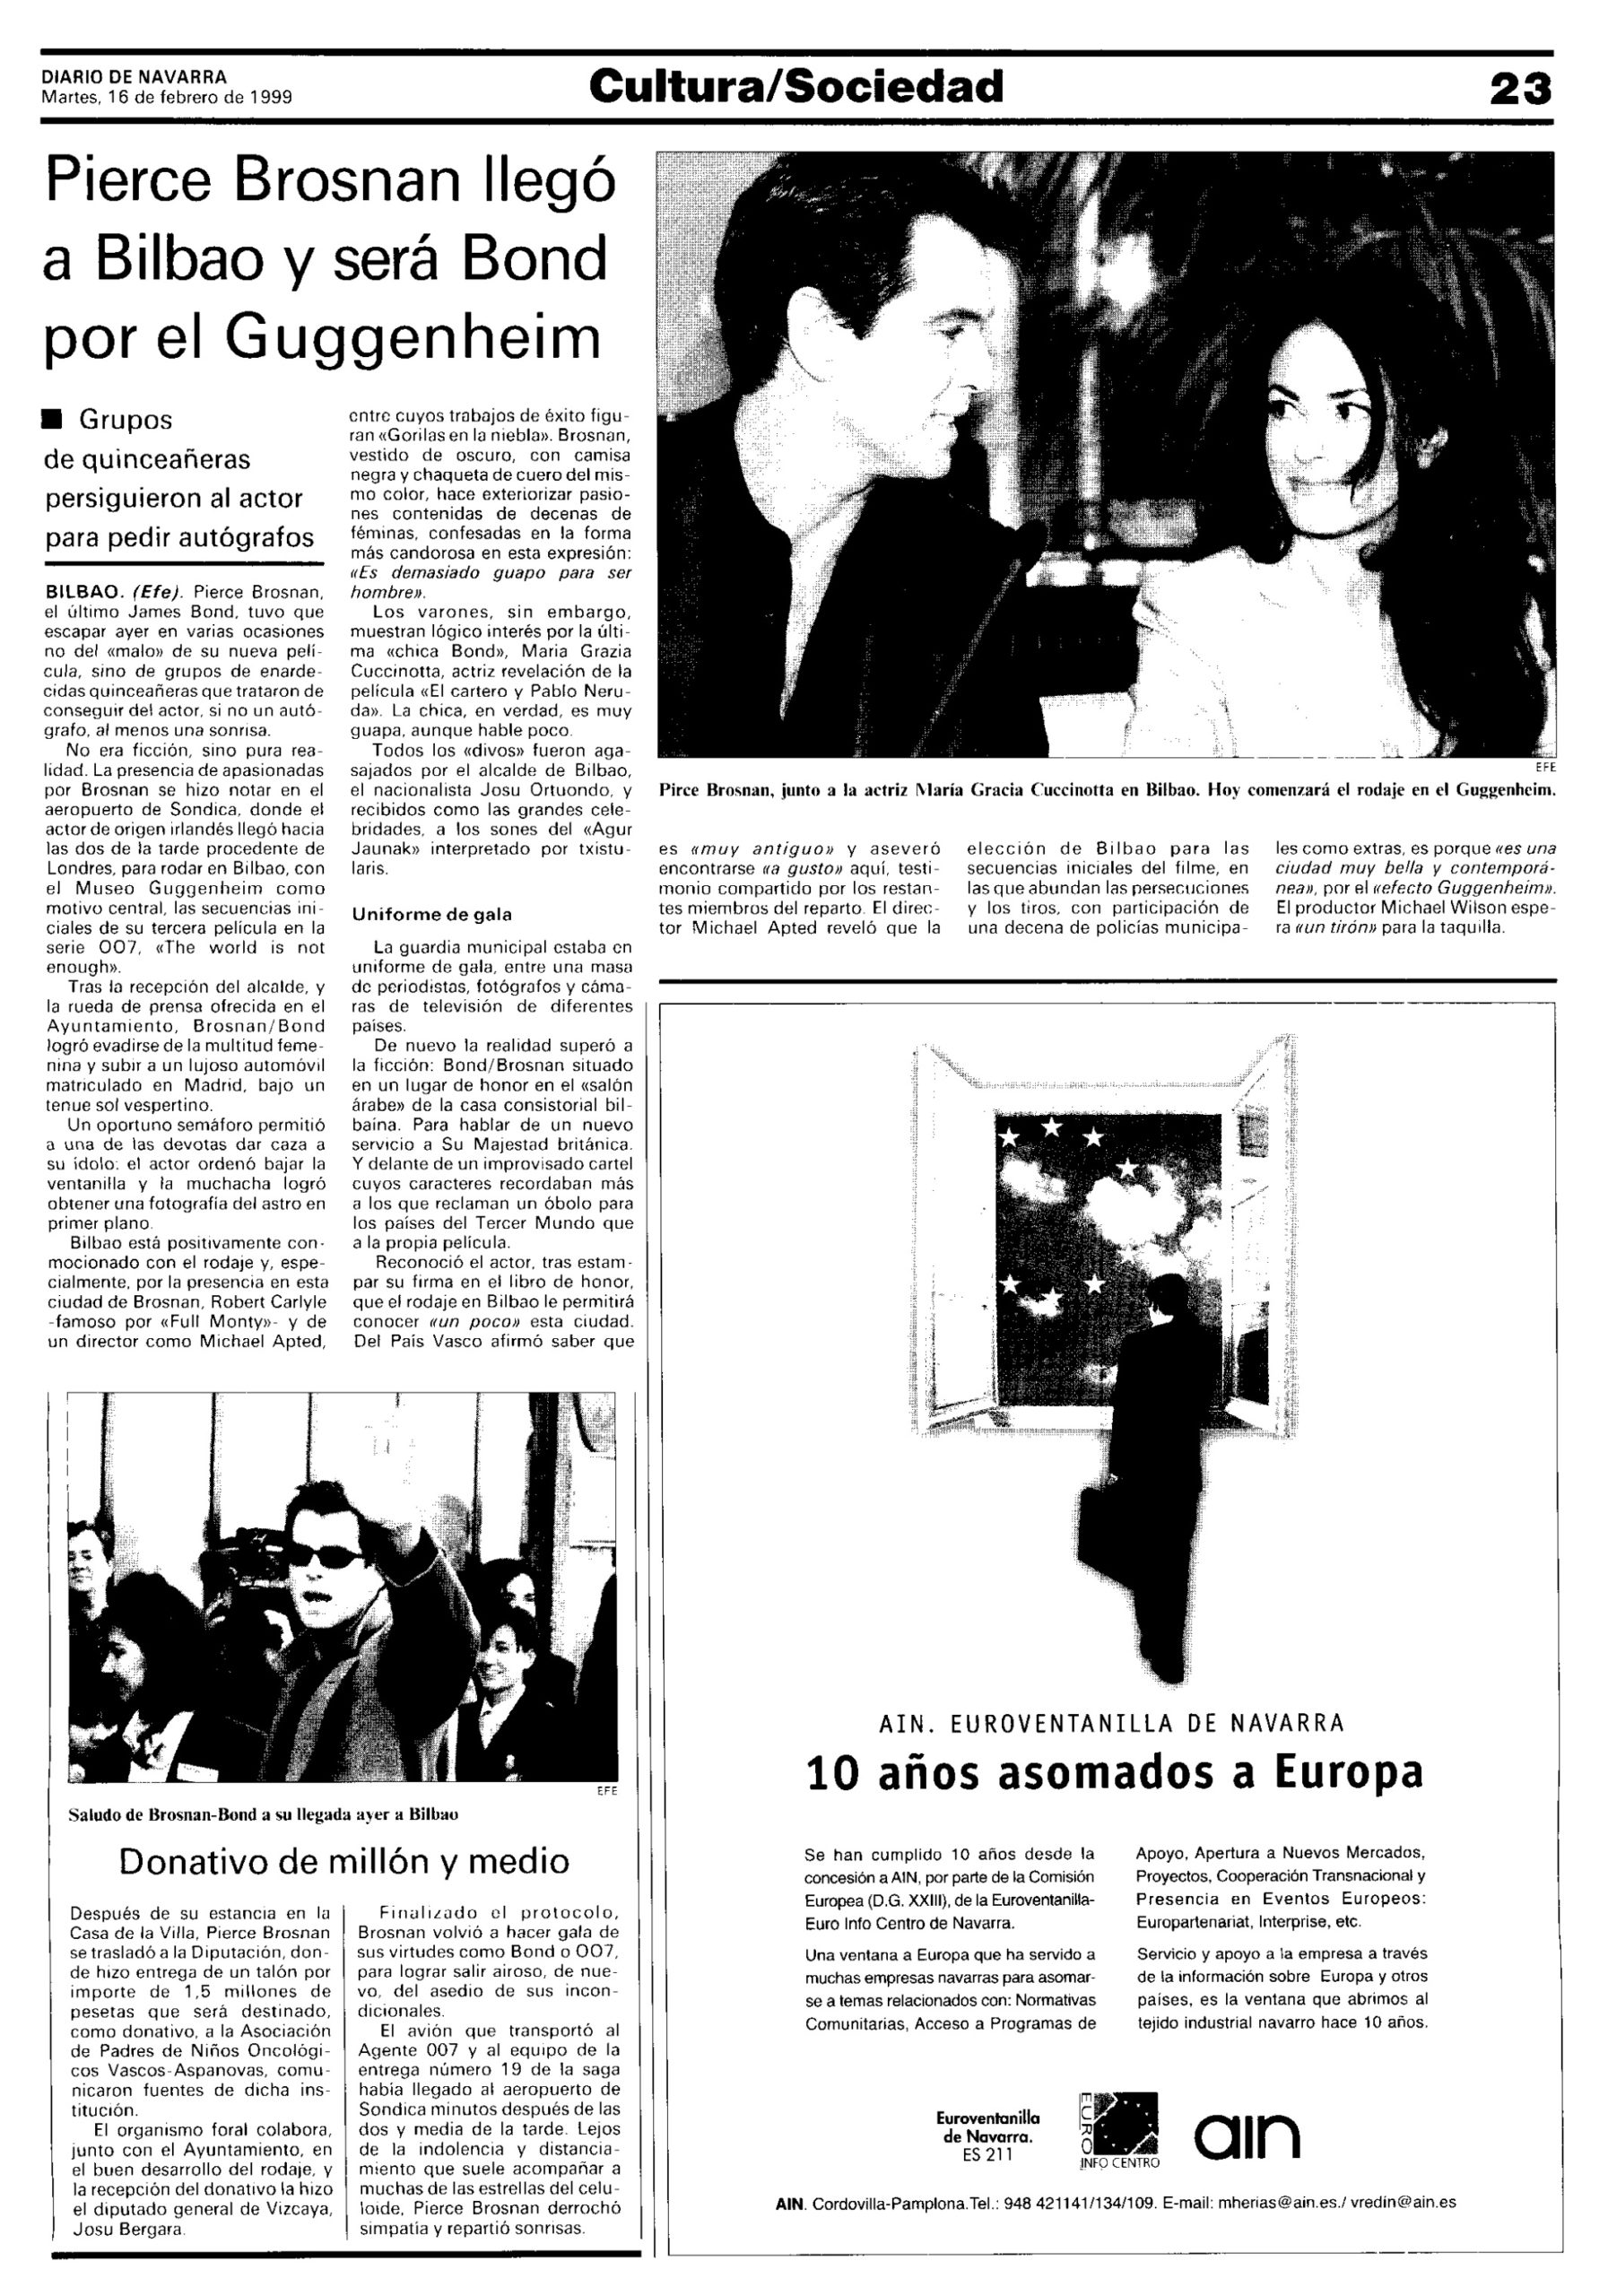 19 1999 02 16 Diario de Navarra 23 Rodaje Bilbao scaled